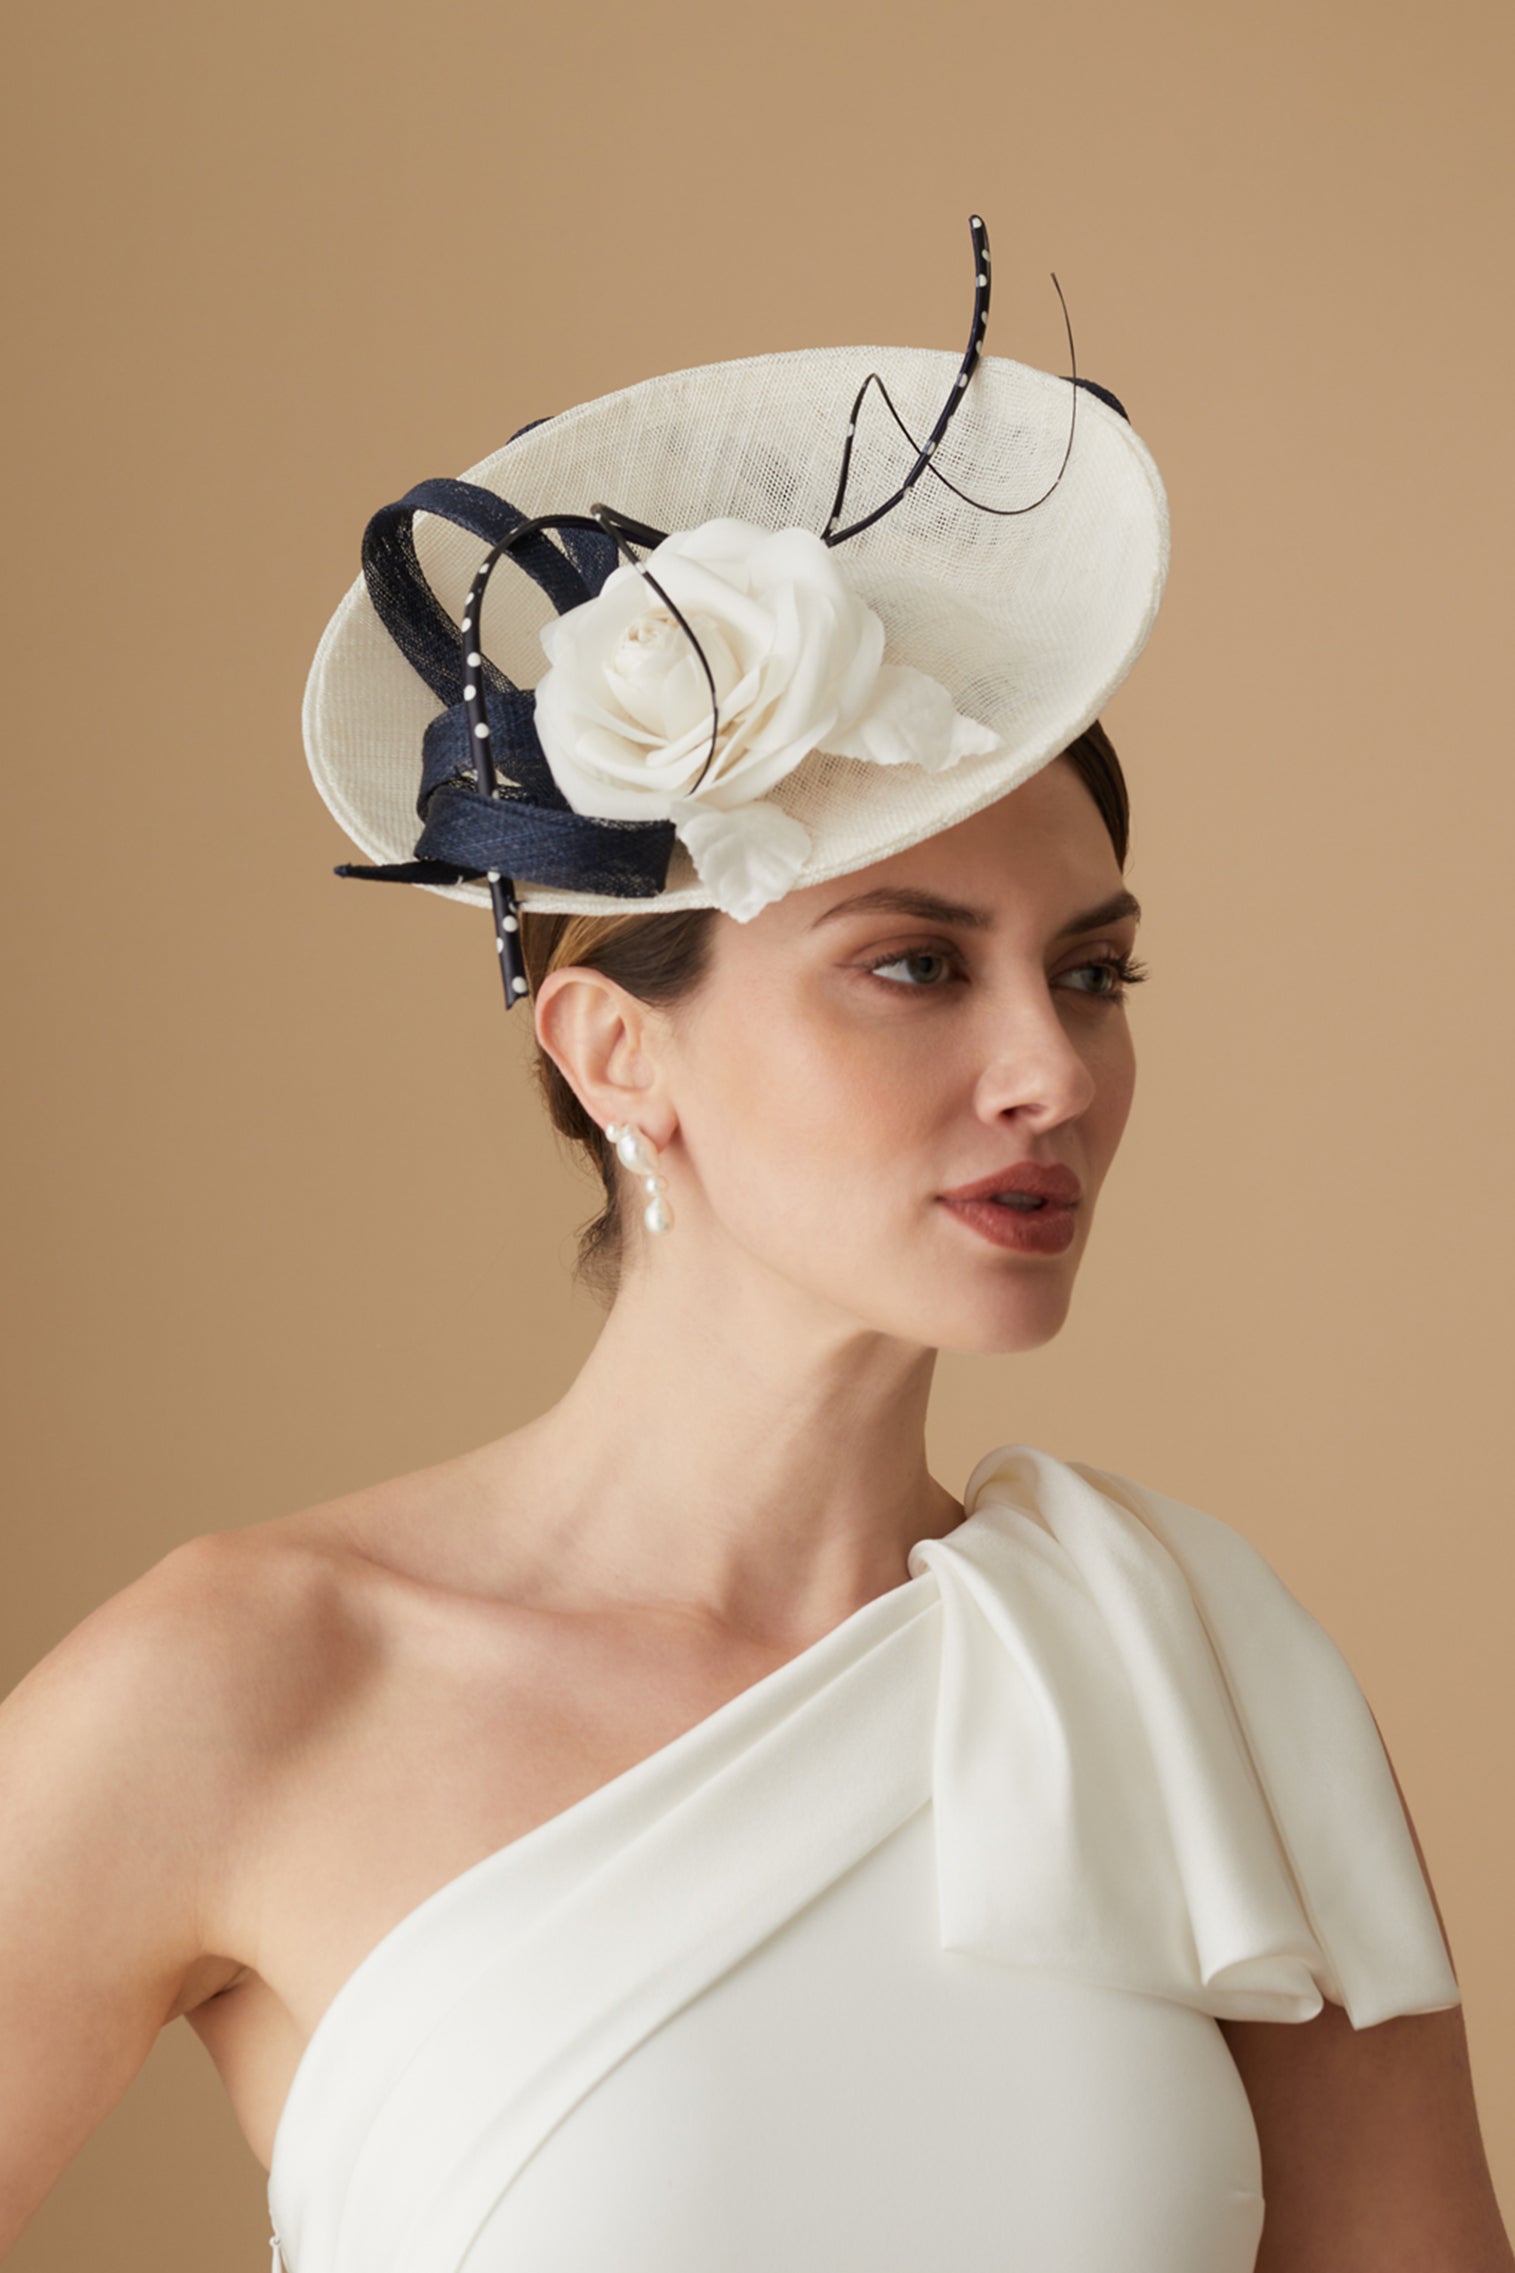 Assam White and Navy Saucer Hat - New Season Women's Hats - Lock & Co. Hatters London UK